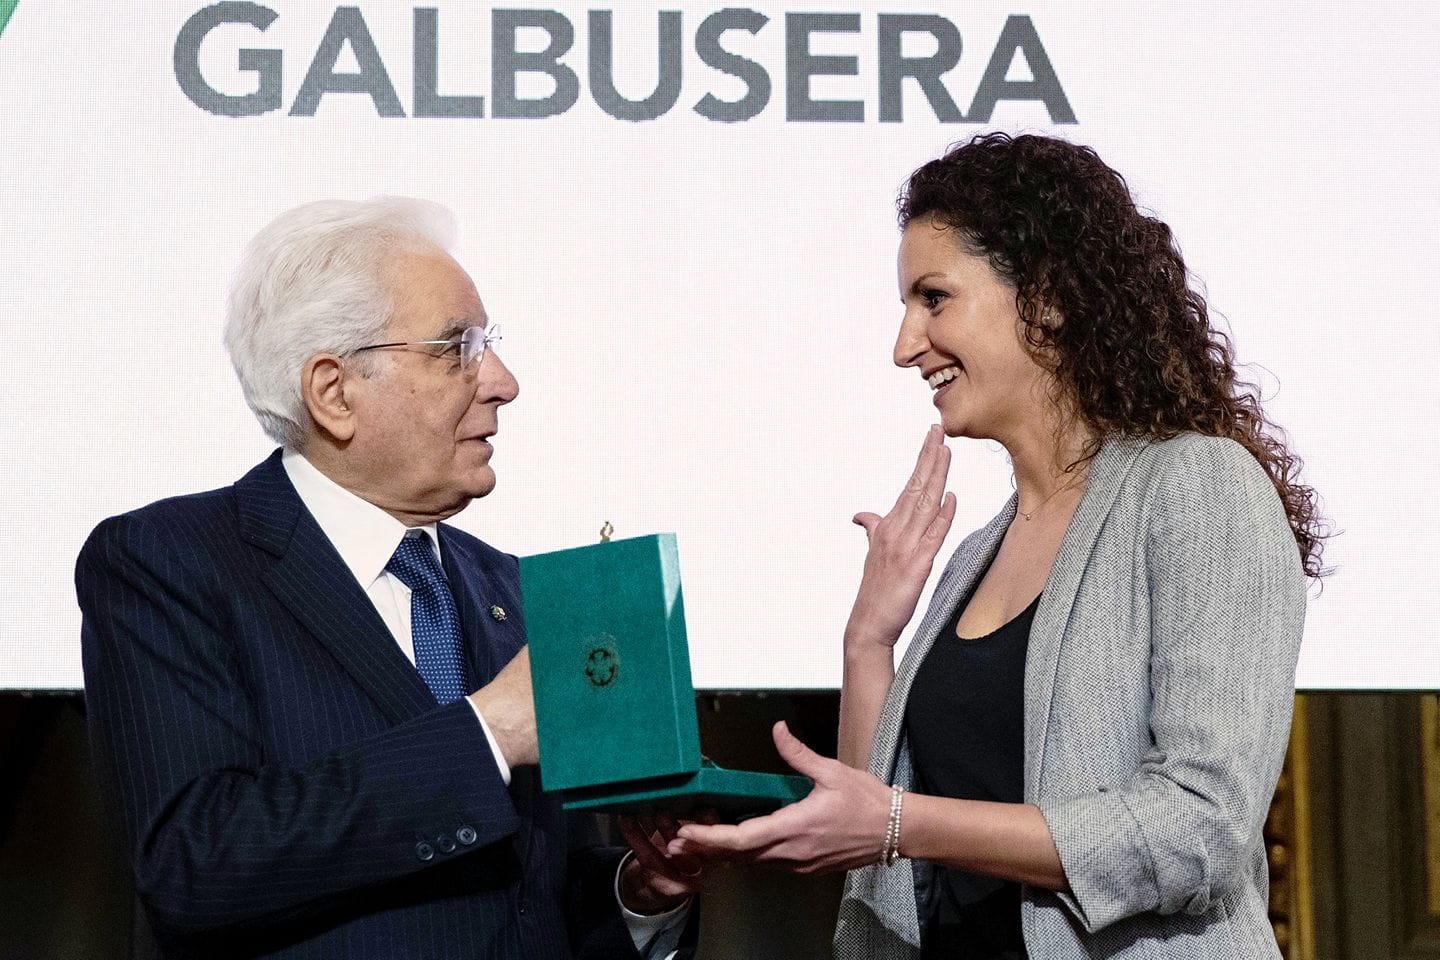 Ilaria Gabusera